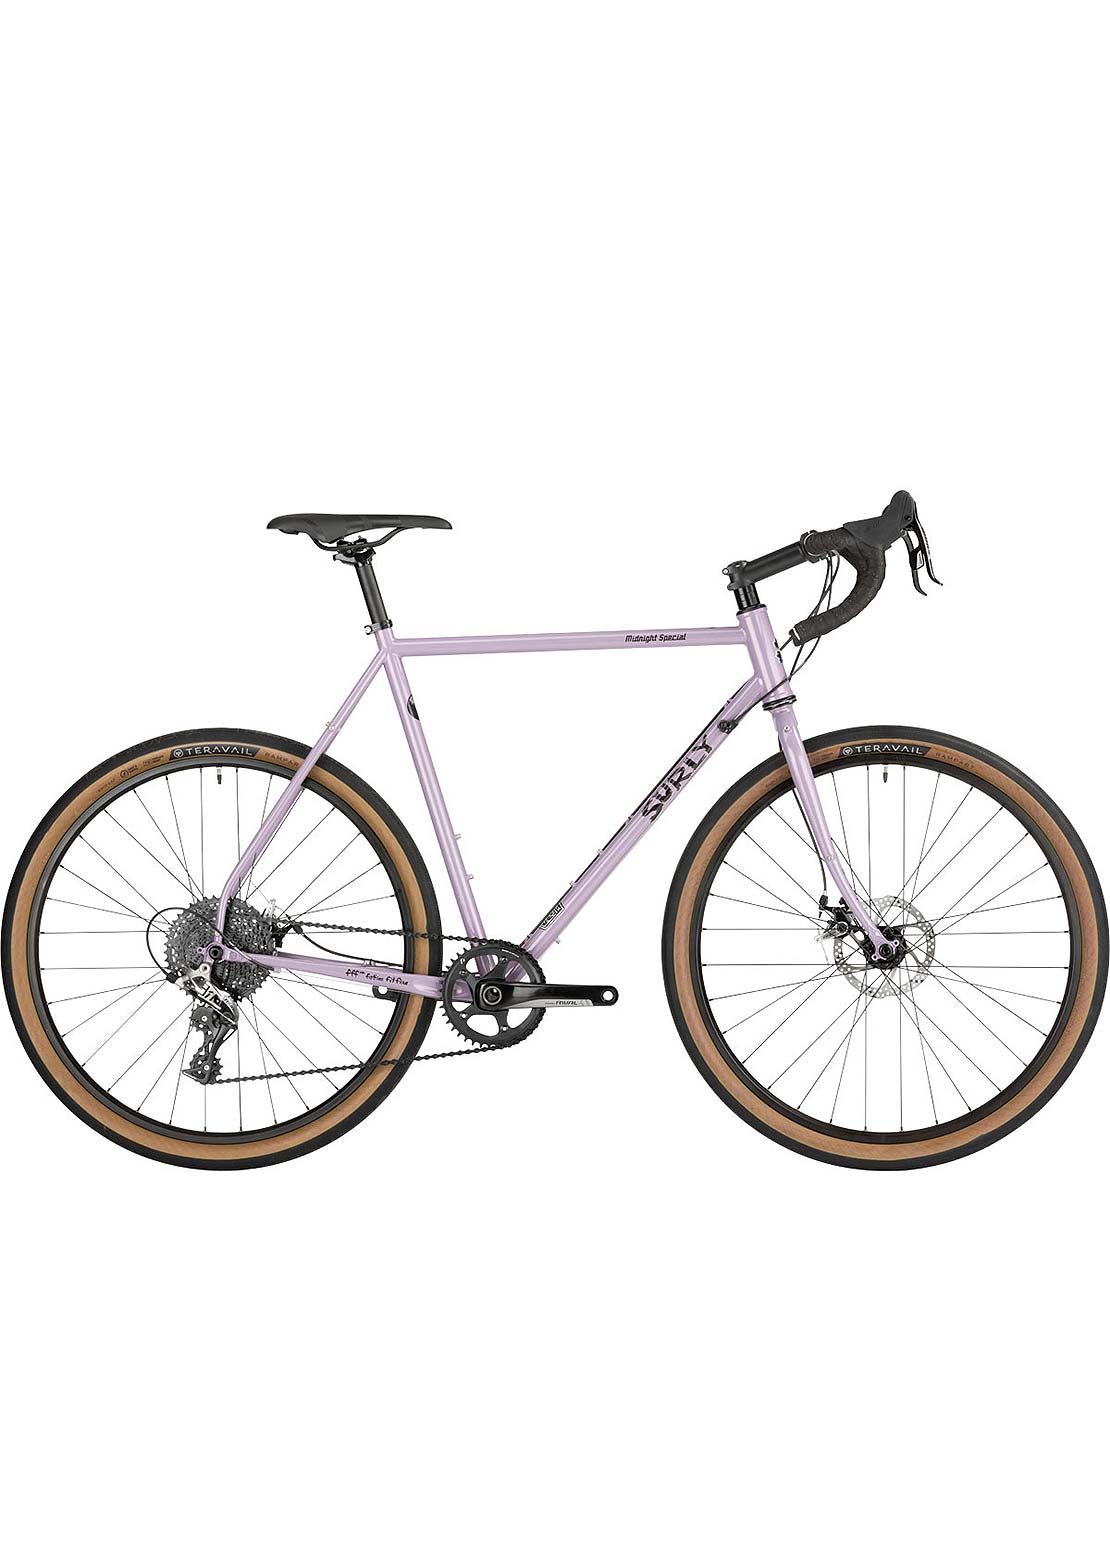 Surly Midnight Special Bike - 650B Metallic Lilac